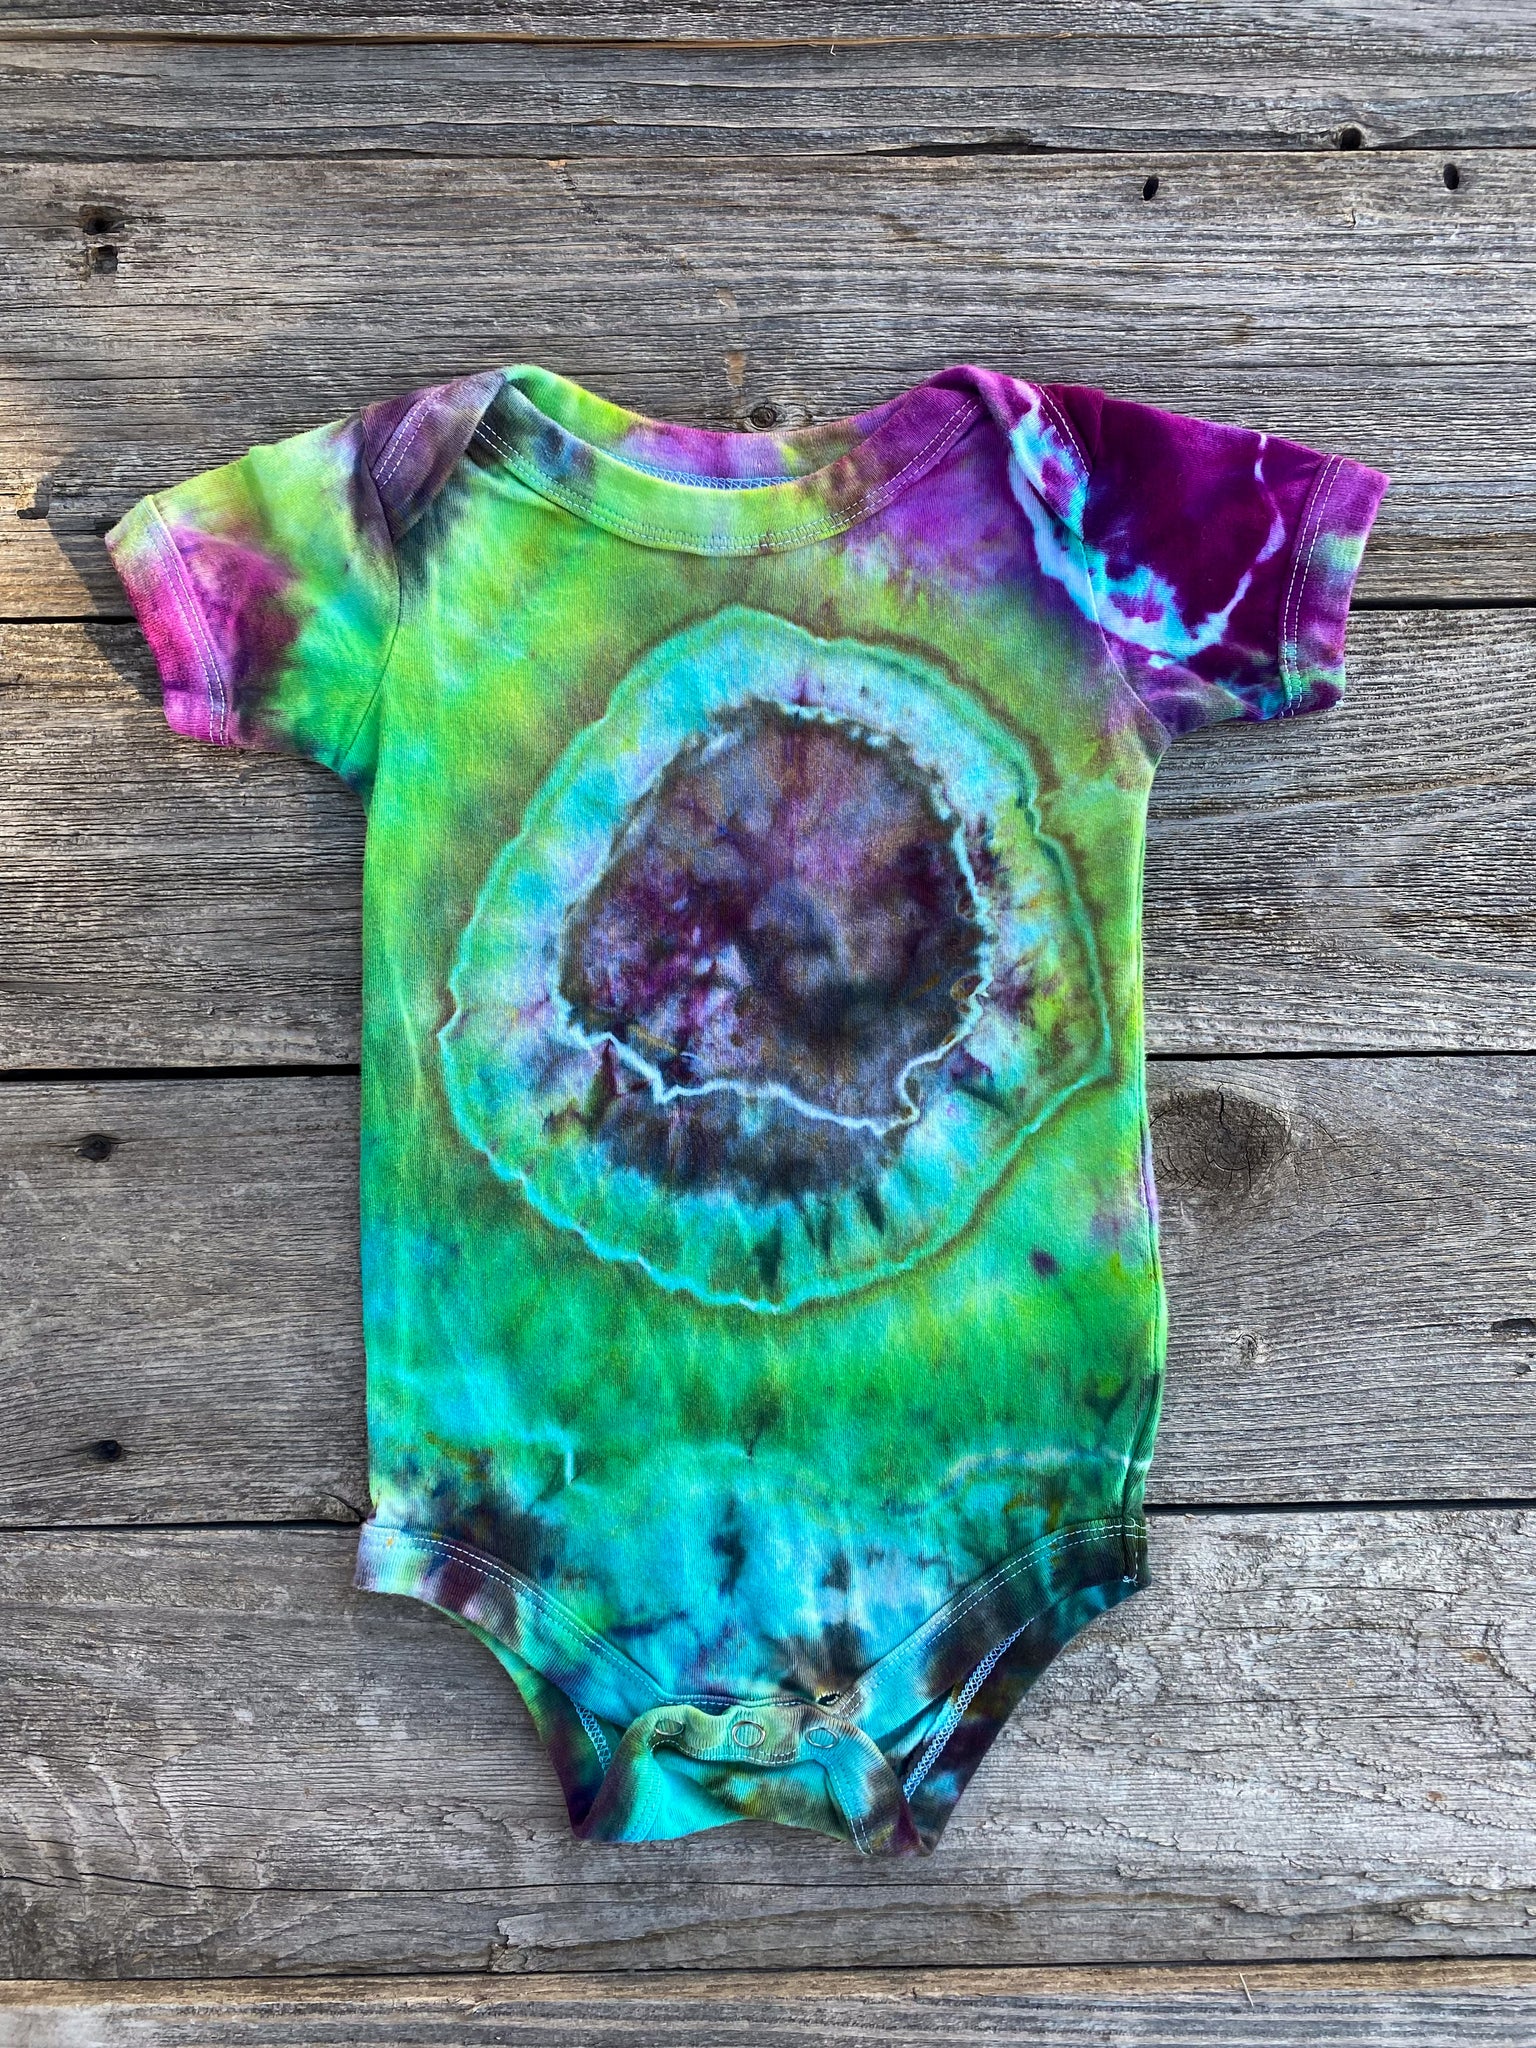 12-18 Month Electric Magenta Geode Tie Dye Baby Bodysuit Shirt